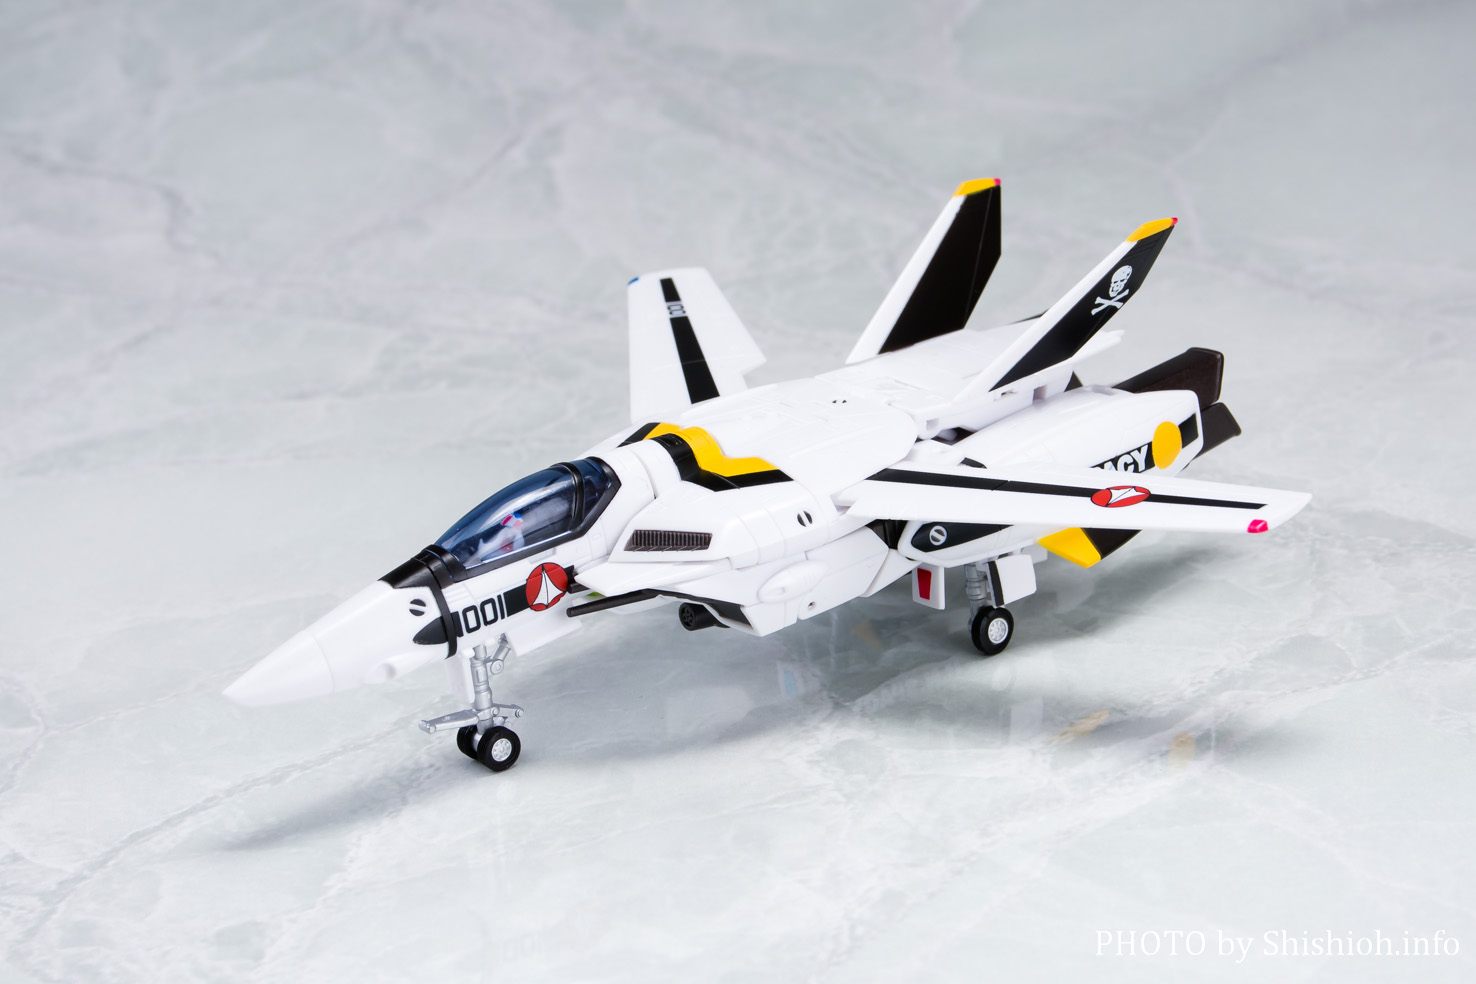 HI-METAL R VF-1S スーパーバルキリー (一条輝機)(ファイター・ガウォーク)